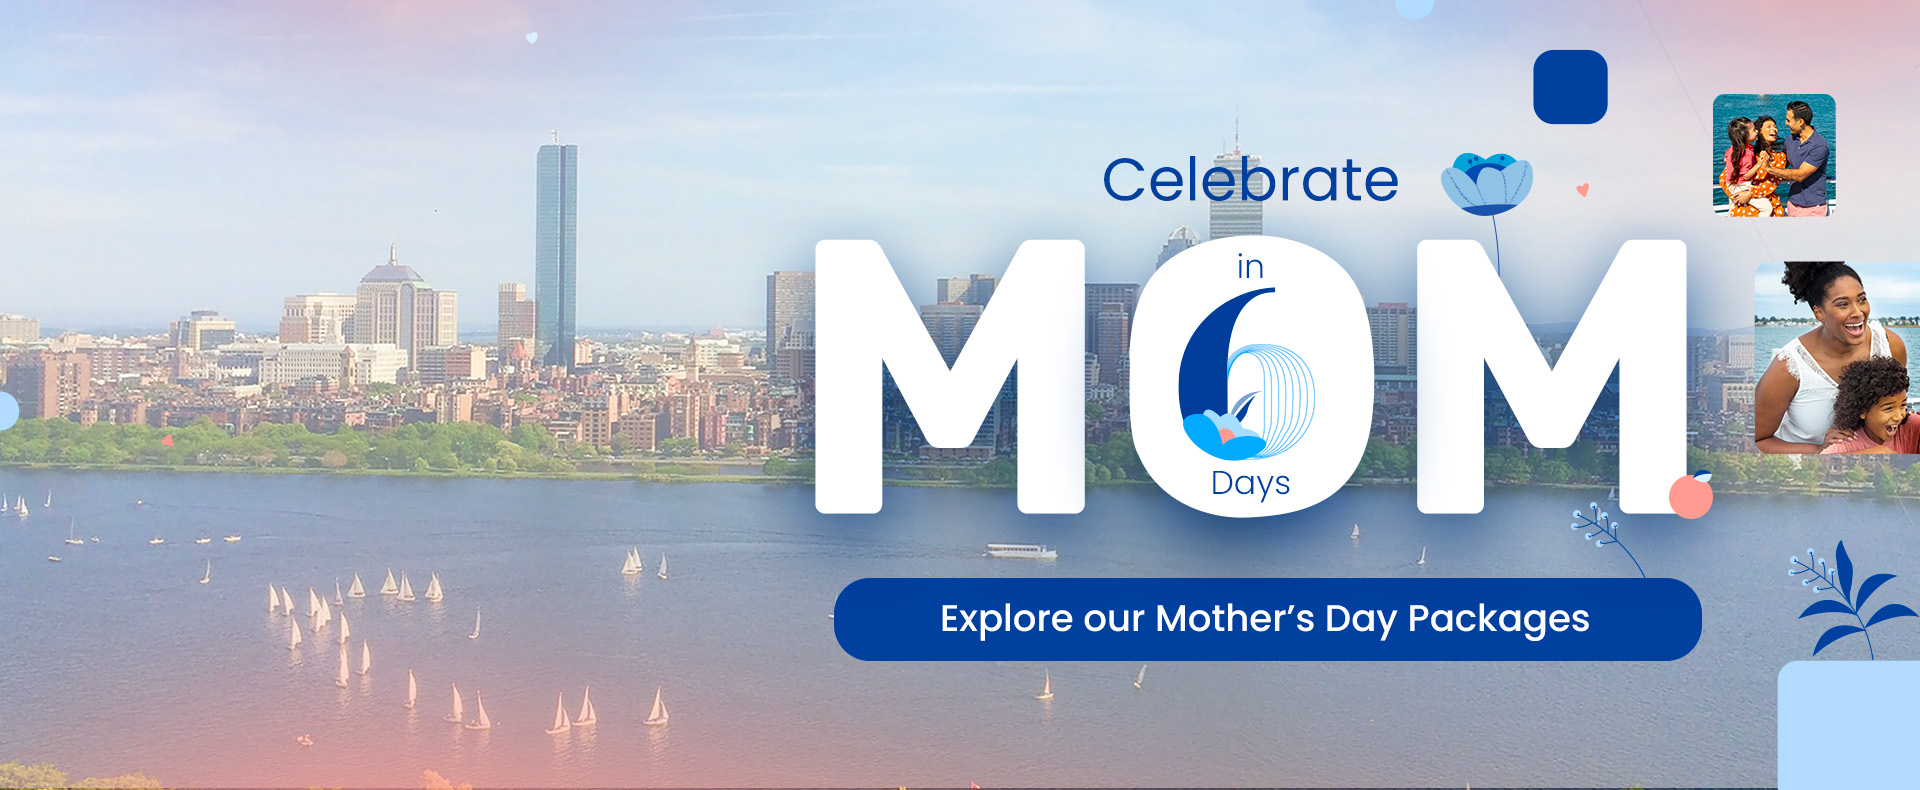 Boston Mothers Day countdown 6 days away